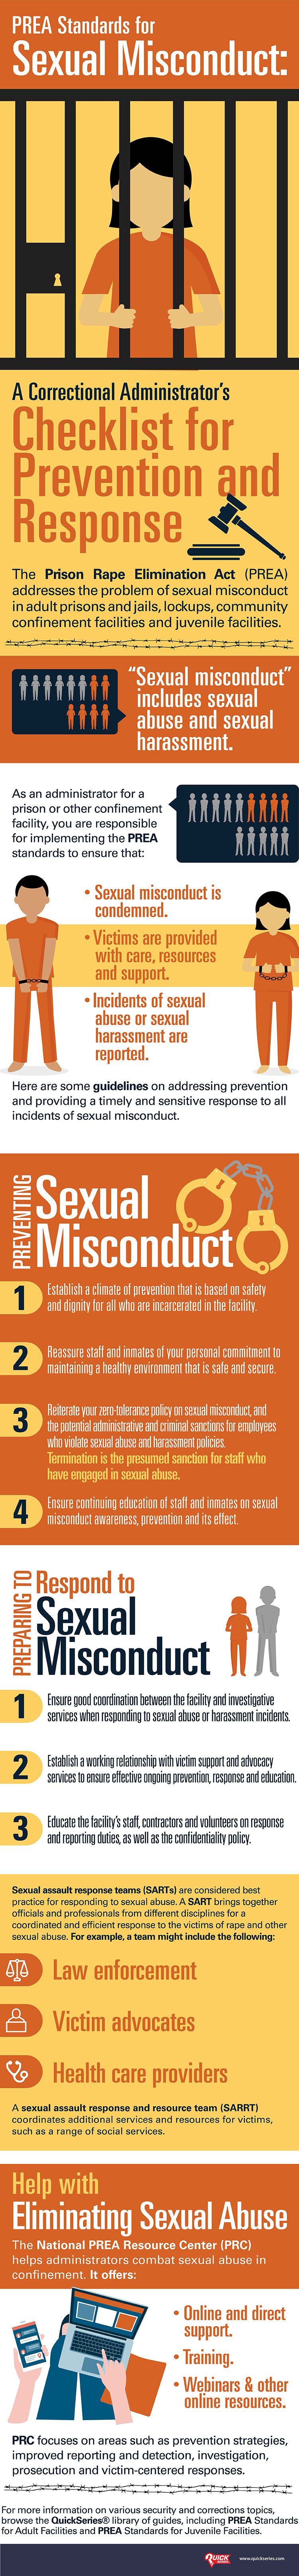 PREA-Sexual-Misconduct-Prisons.jpg